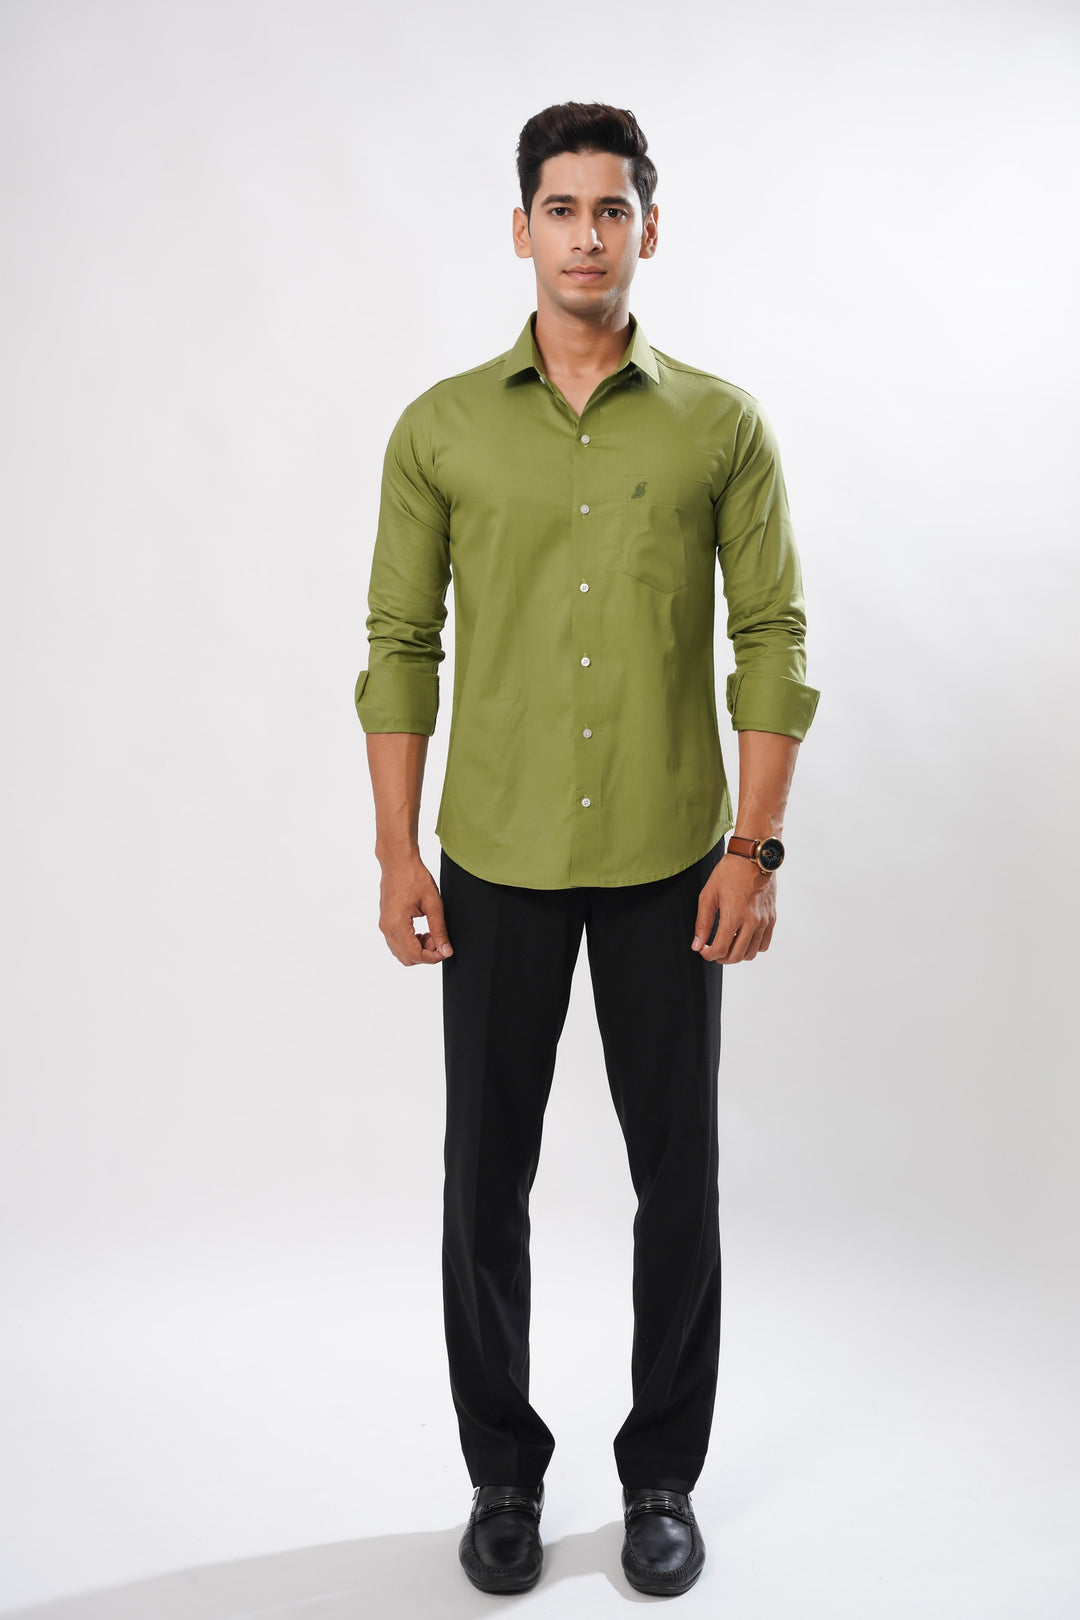 Olive Green Oxford Cotton Premium Plaid Shirt